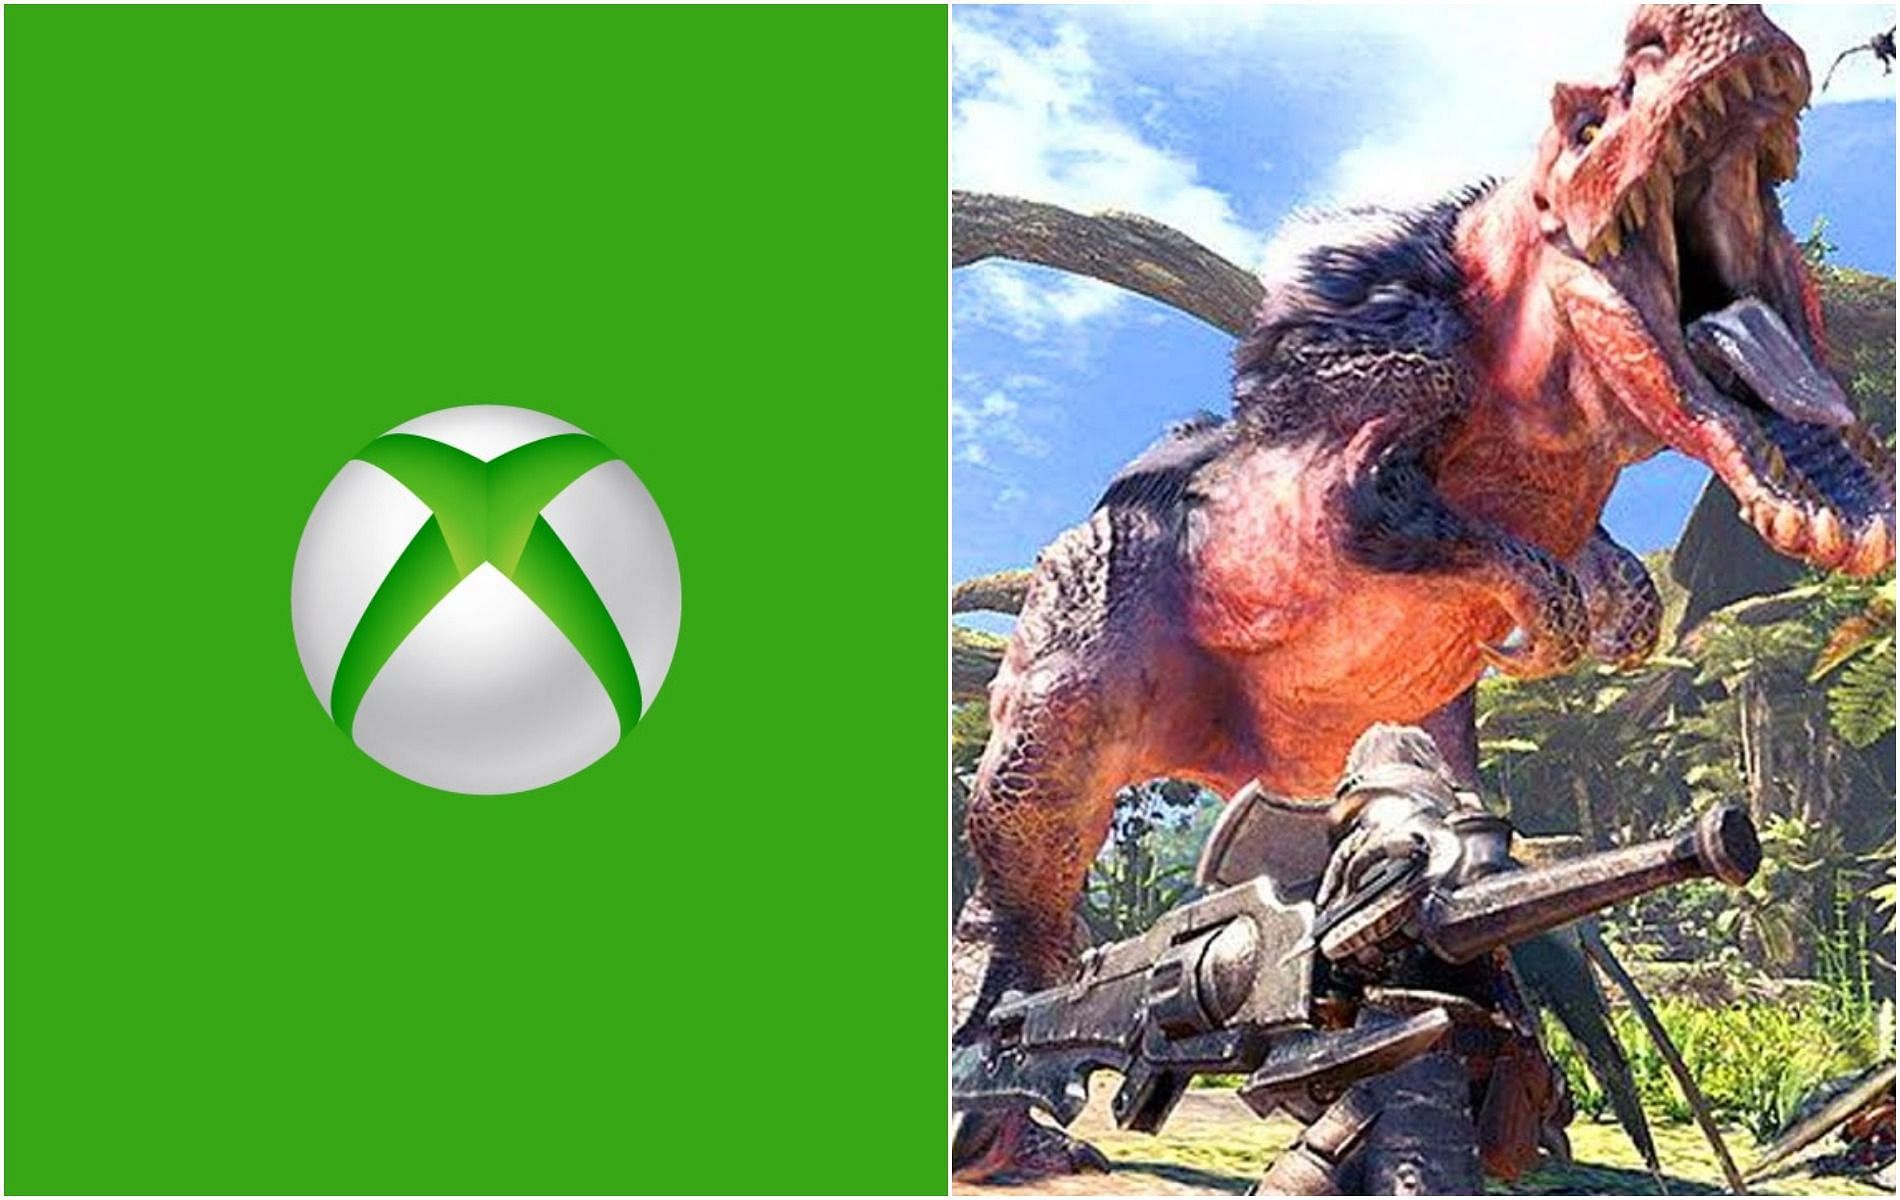 Xbox is in talks for a Monster Hunter clone (Image via Sportskeeda)